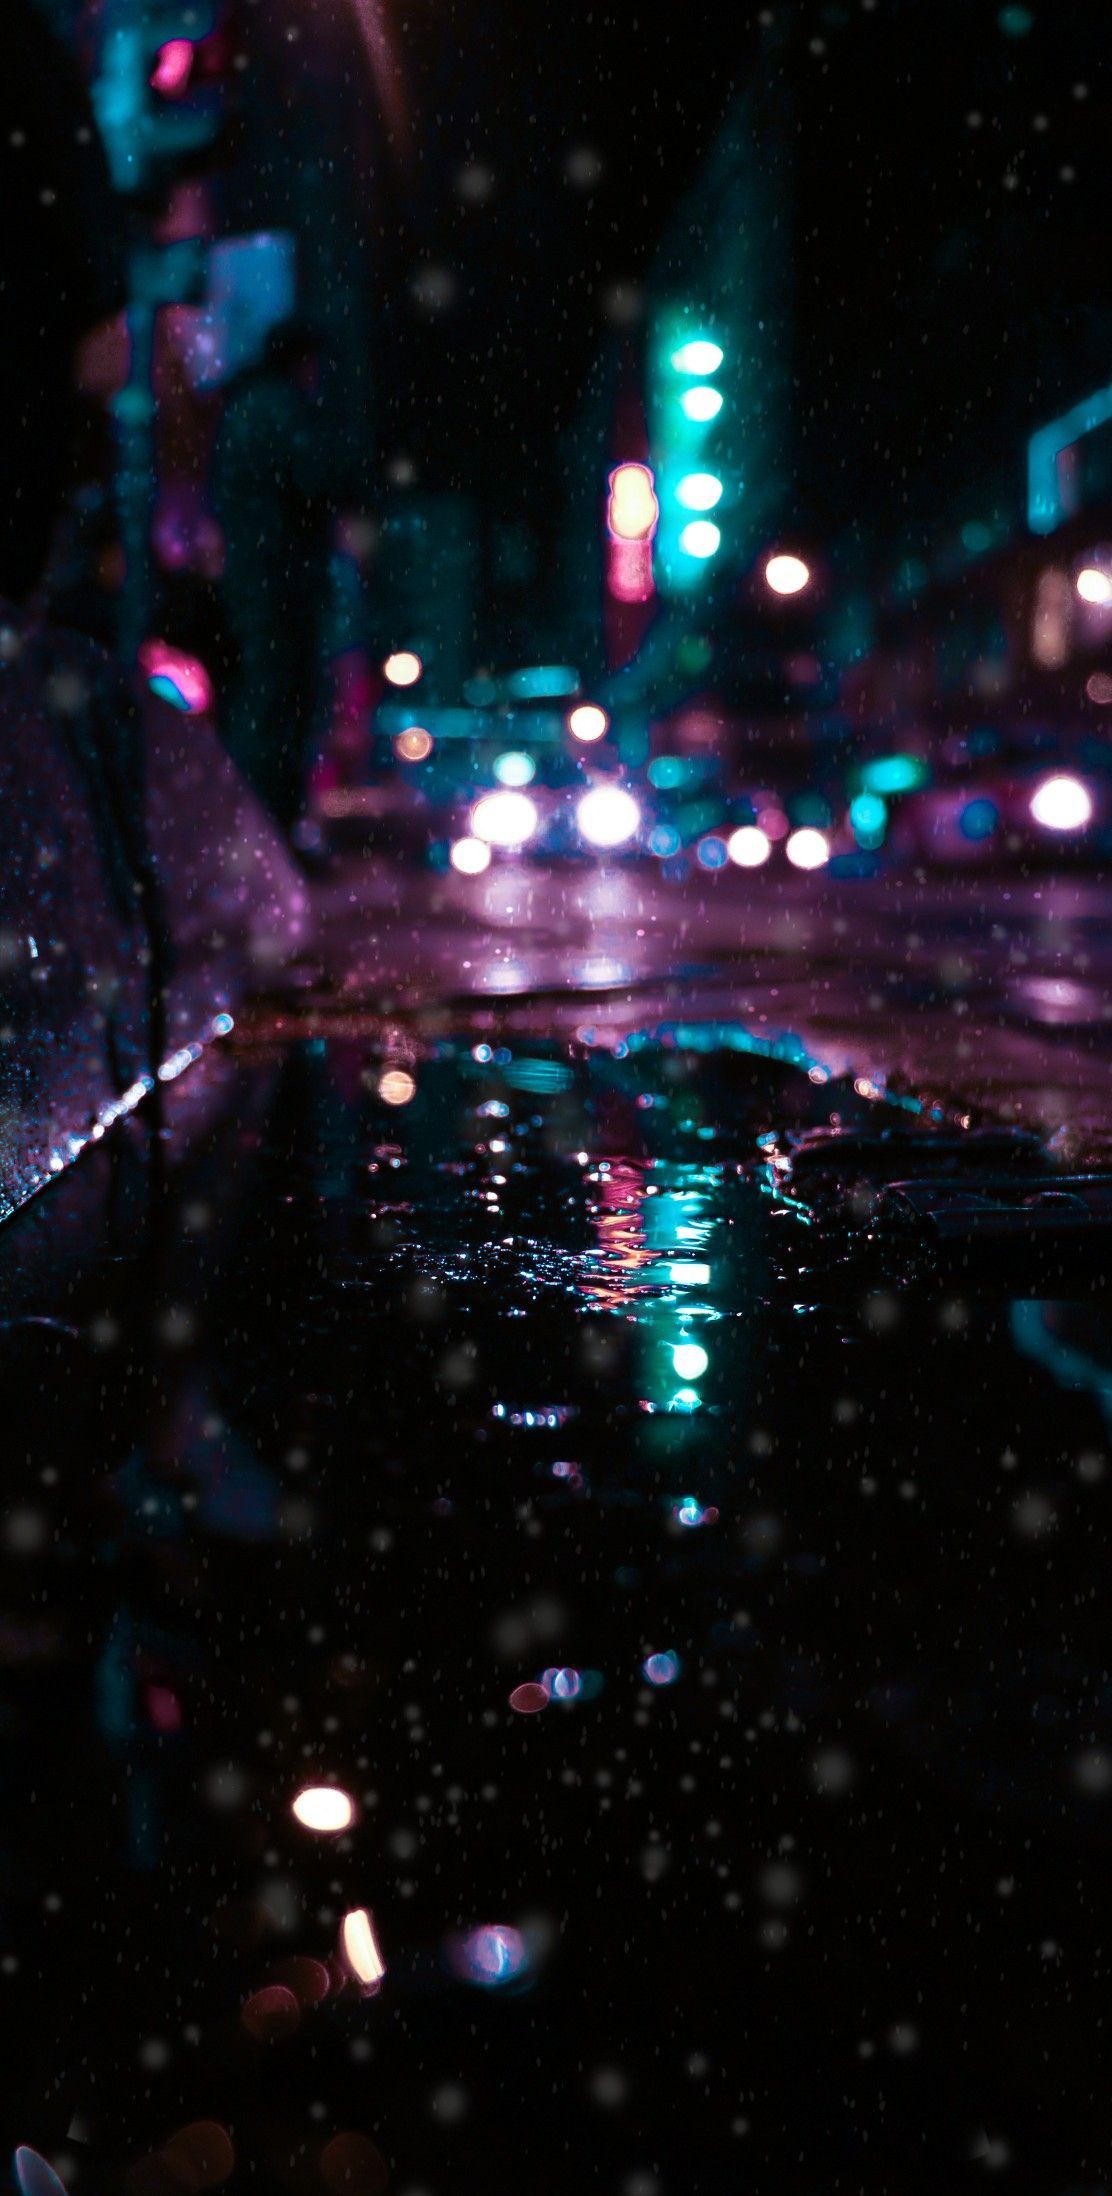 A city street with cars and lights - Rain